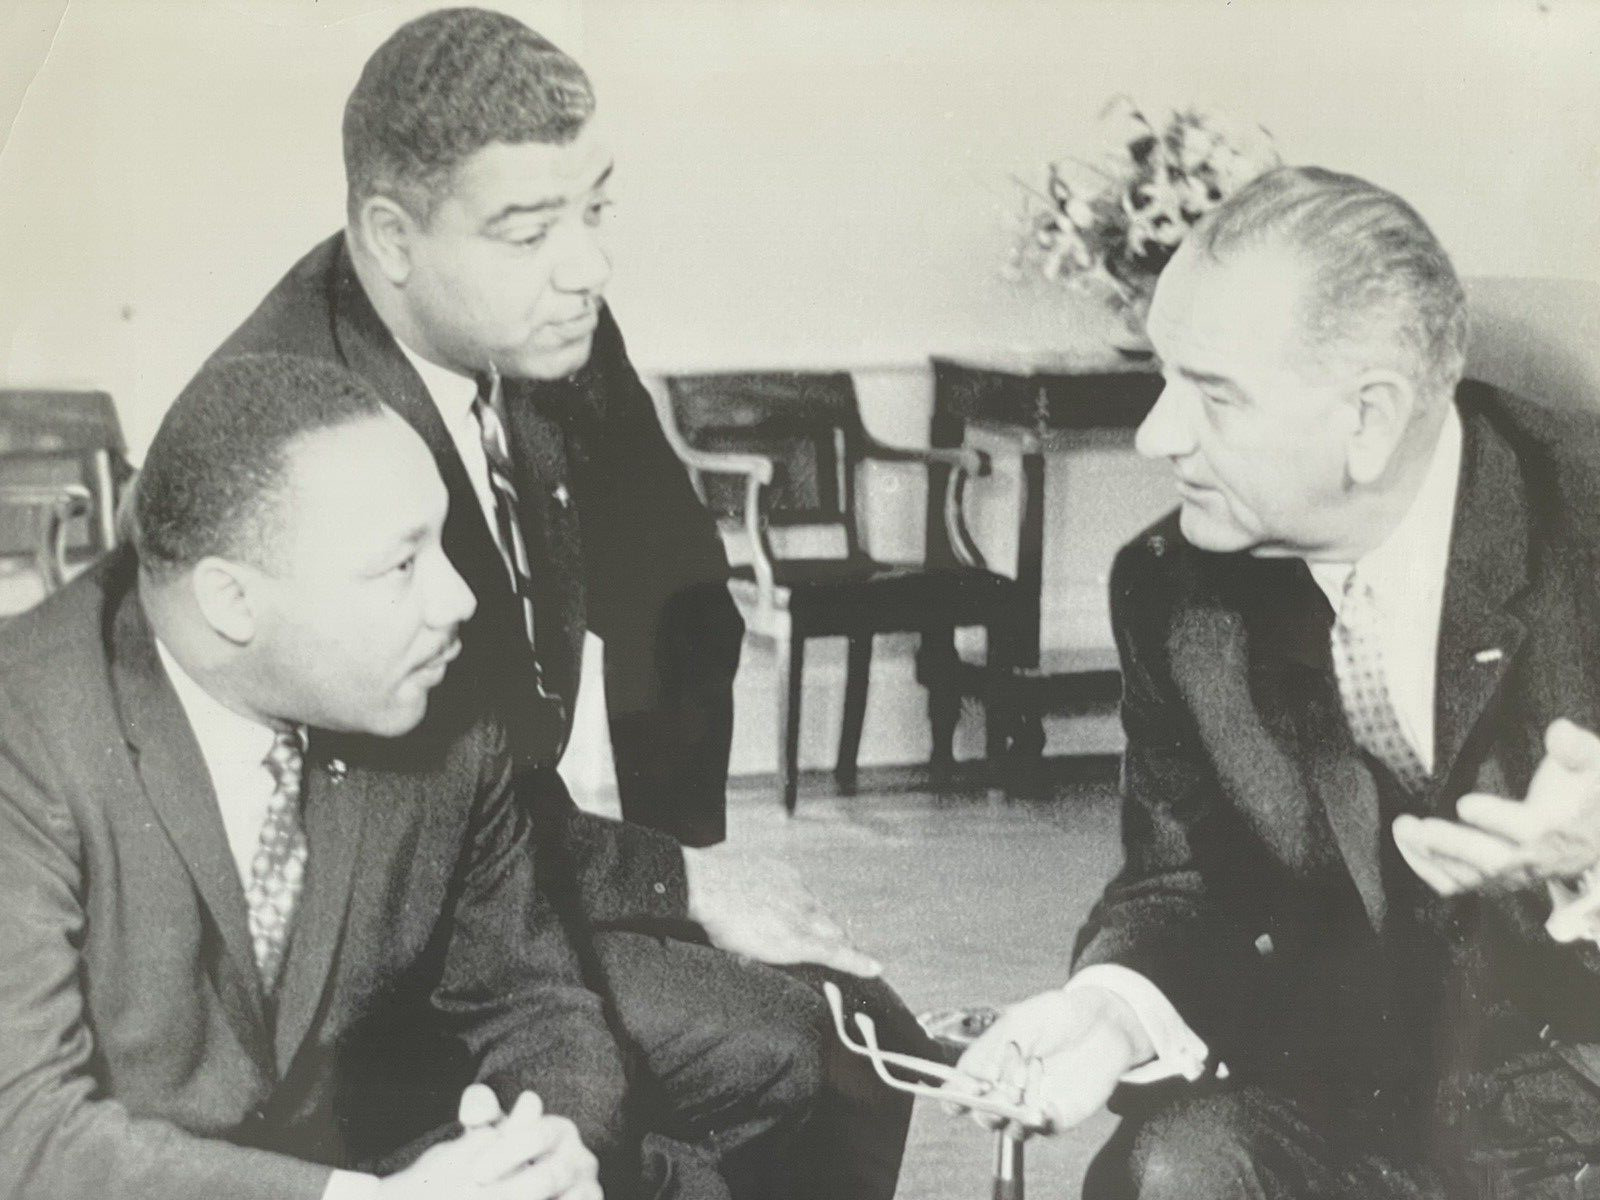 MLK, Young, Johnson Civil Rights Press Photograph 1968 #historyinpieces